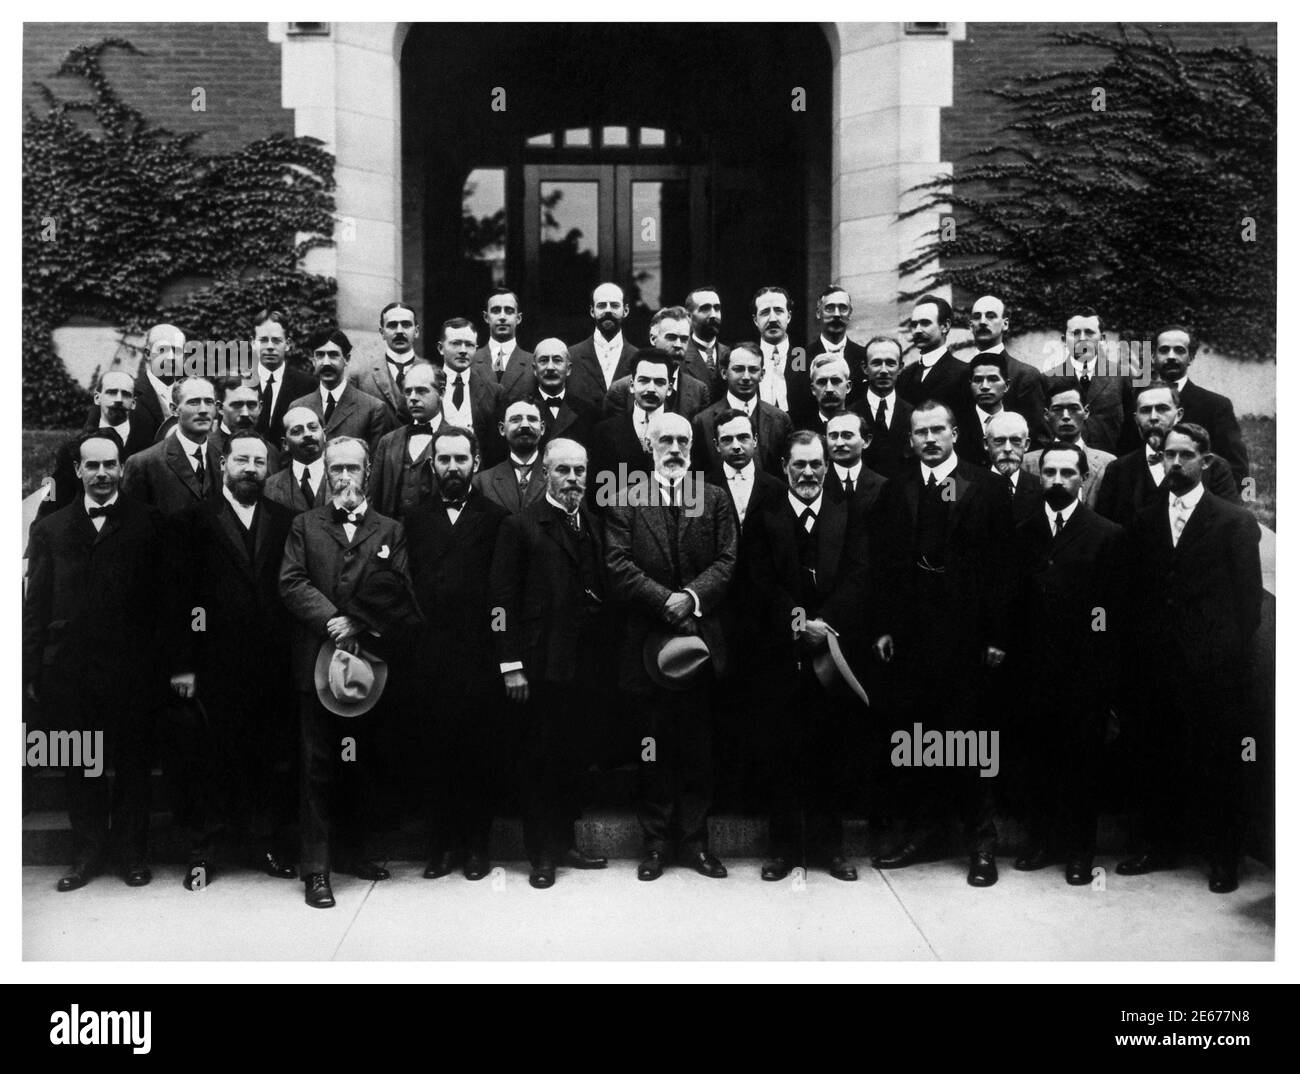 1909 , GREAT BRITAIN : The german Doctor Professor CARL Gustav JUNG ( 1875 - 1961 ) at Clark University , with SIGMUND FREUD ( 1856 - 1939 ) and others Psychologists and psychiatrists. Front row, left to right: Franz Boas , E.B. Titchener , William James , William Stern , Leo Burgerstein , G. Stanley Hall , Sigmund Freud , Carl G. Jung , Adolf Meyer , H.S. Jennings . Second row: C.E. Seashore , Joseph Jastrow , J. McK. Cattell , E.F. Buchner , E. Katzenellenbogen , Ernest Jones , A.A. Brill , Wm. H. Burnham , A.F. Chamberlain . Third row: Albert Schinz , J.A. Magni , B.T. Baldwin , F. Lyman We Stock Photo